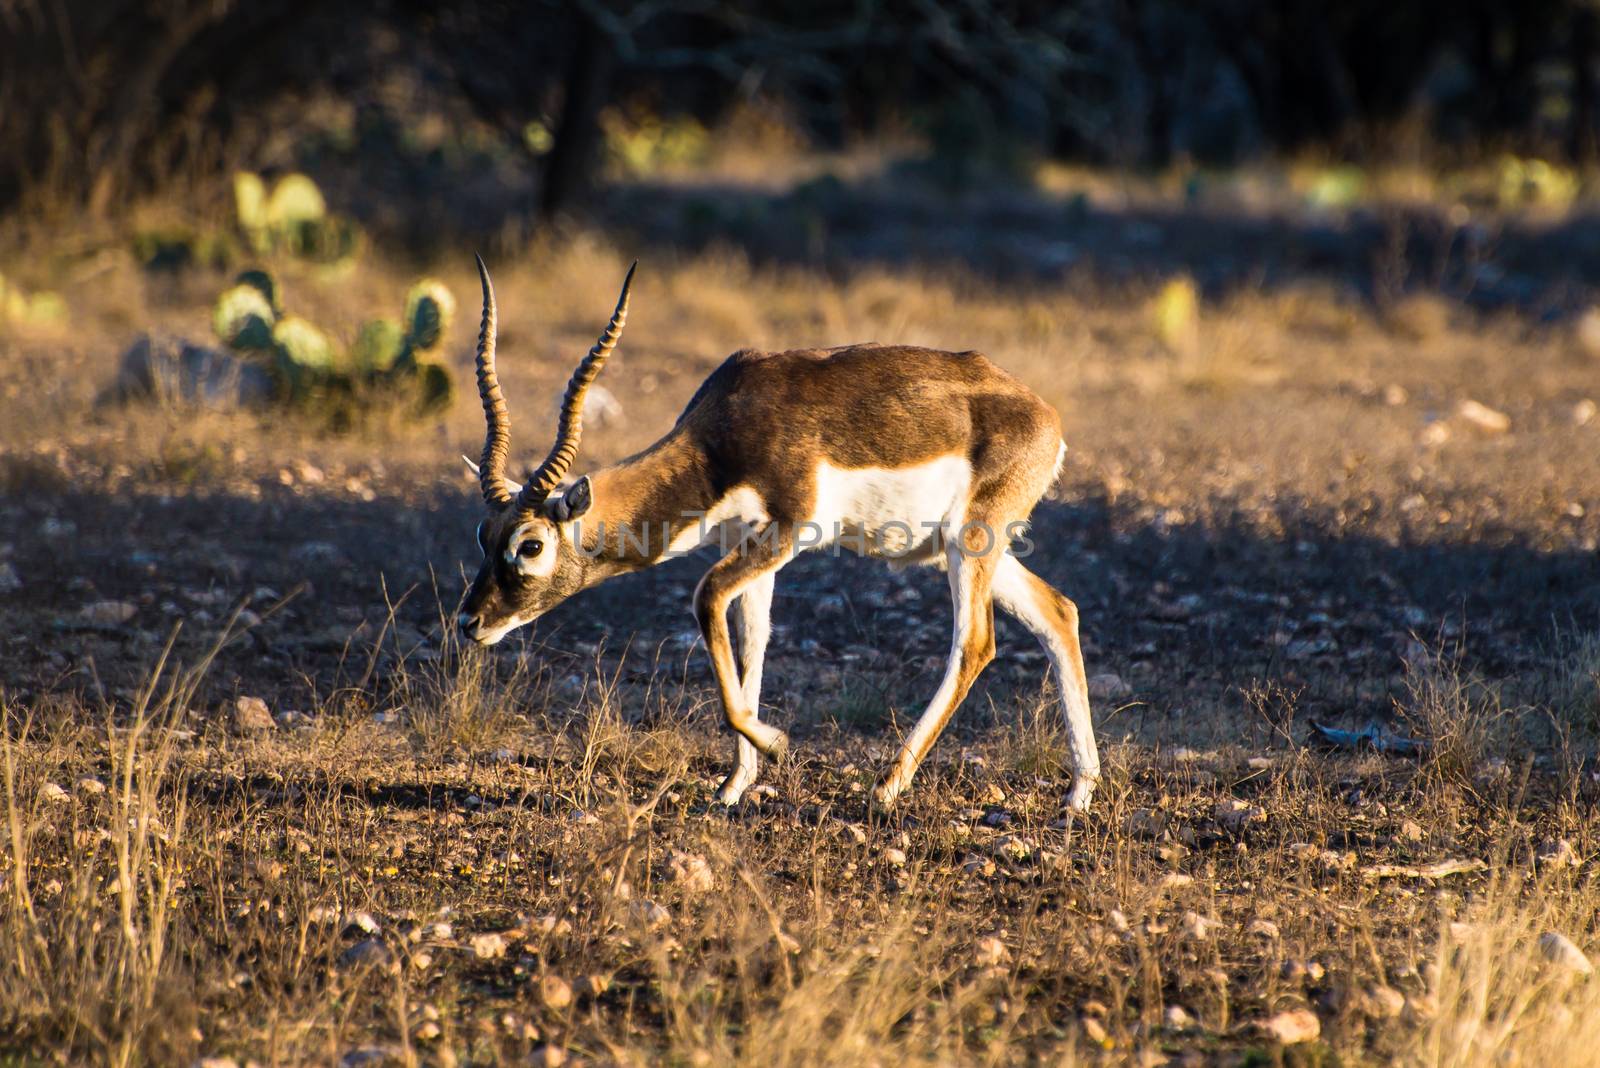 Blackbuck Antelope walking with his head down